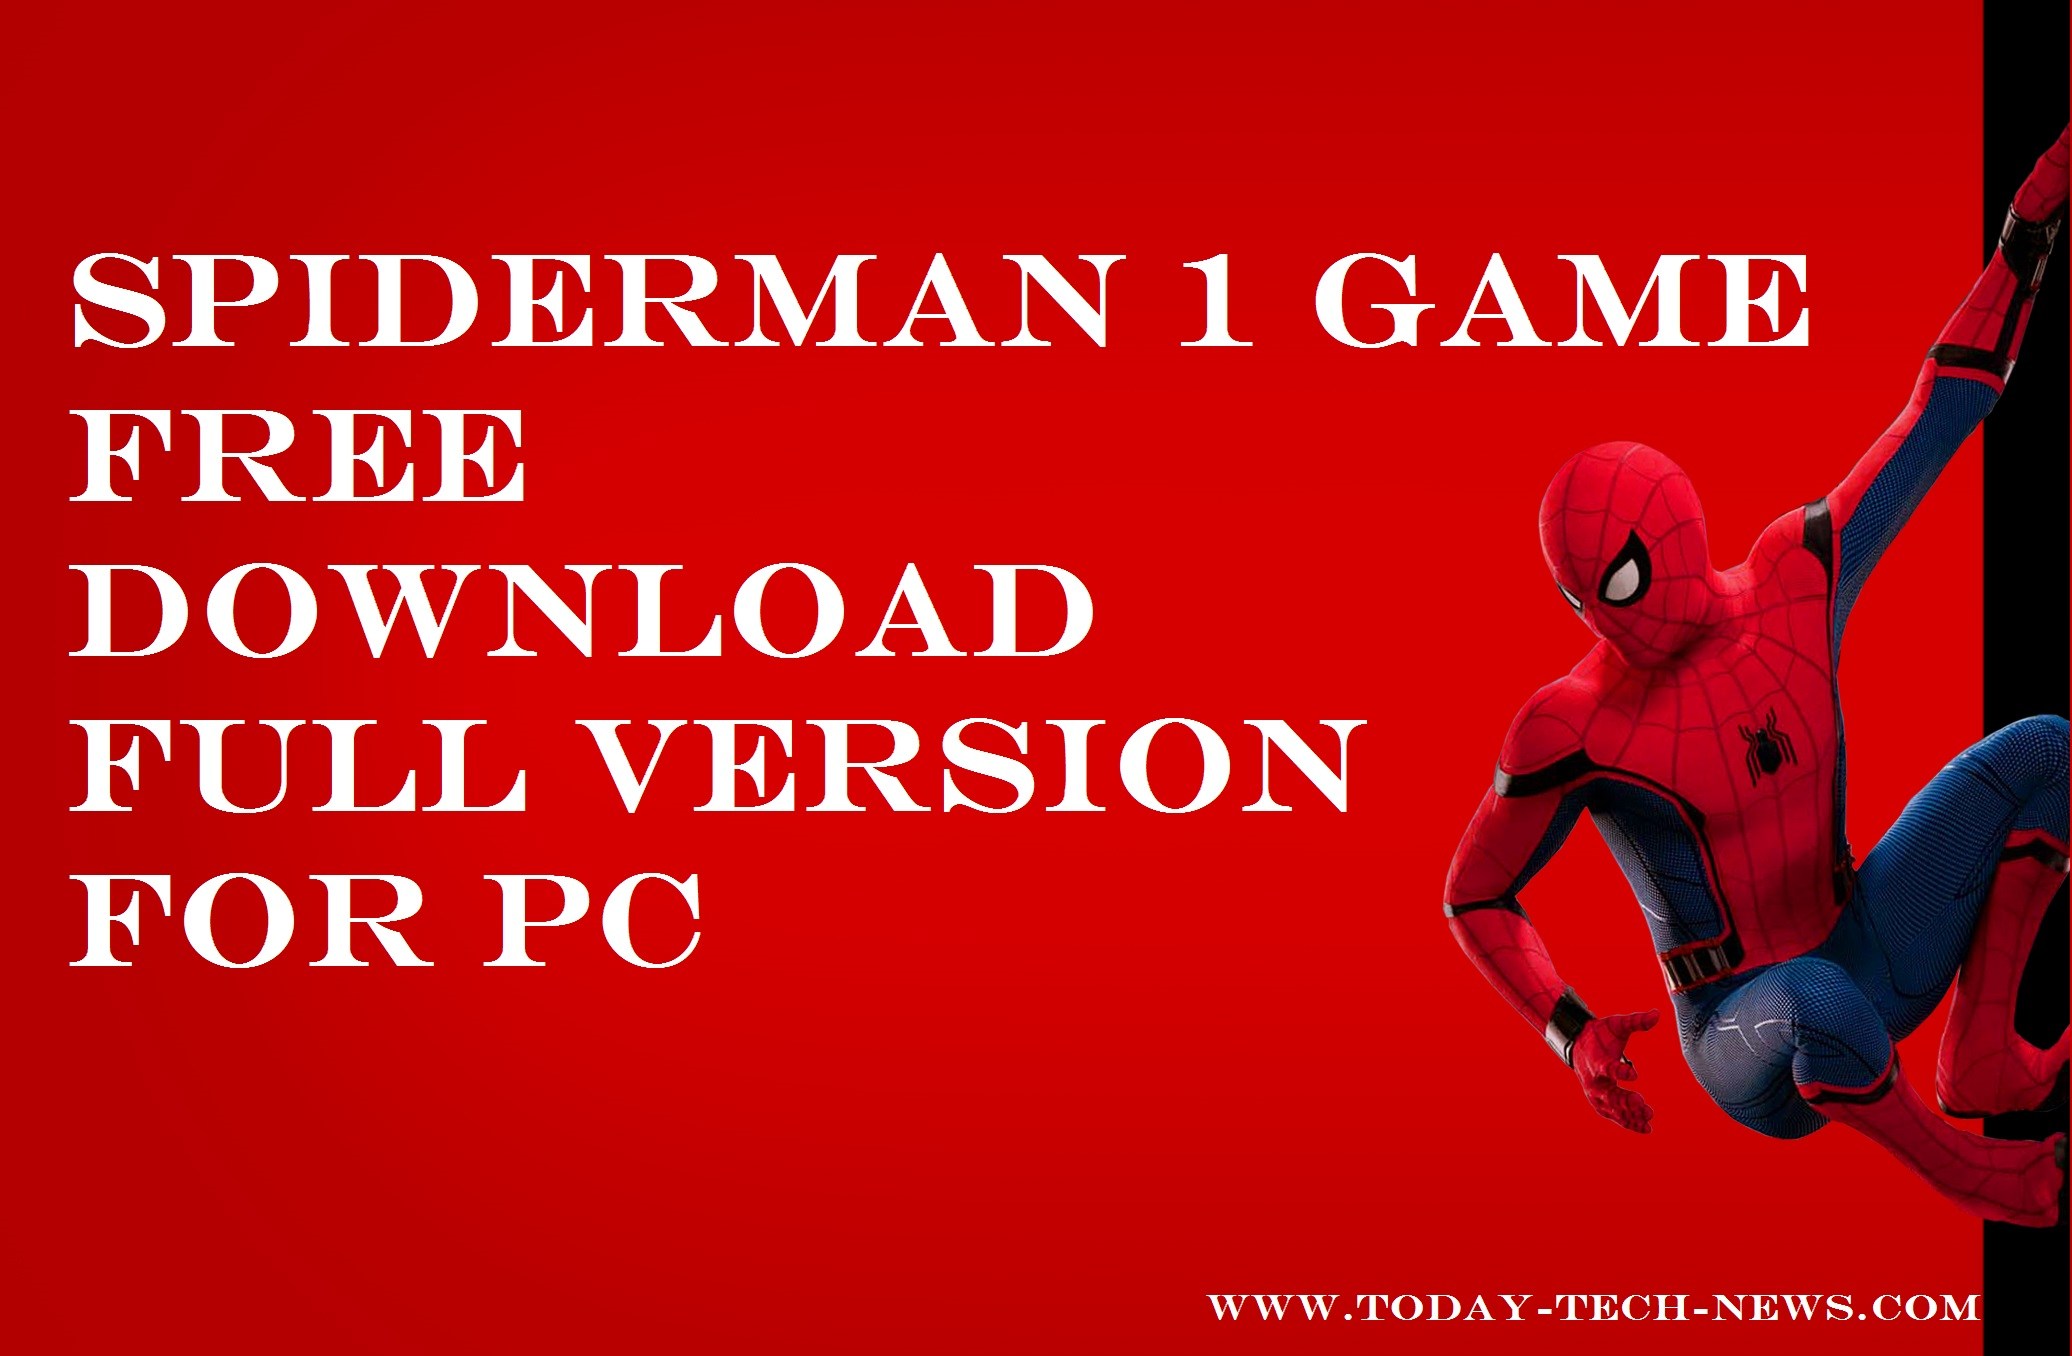 Spiderman 1 Game Download